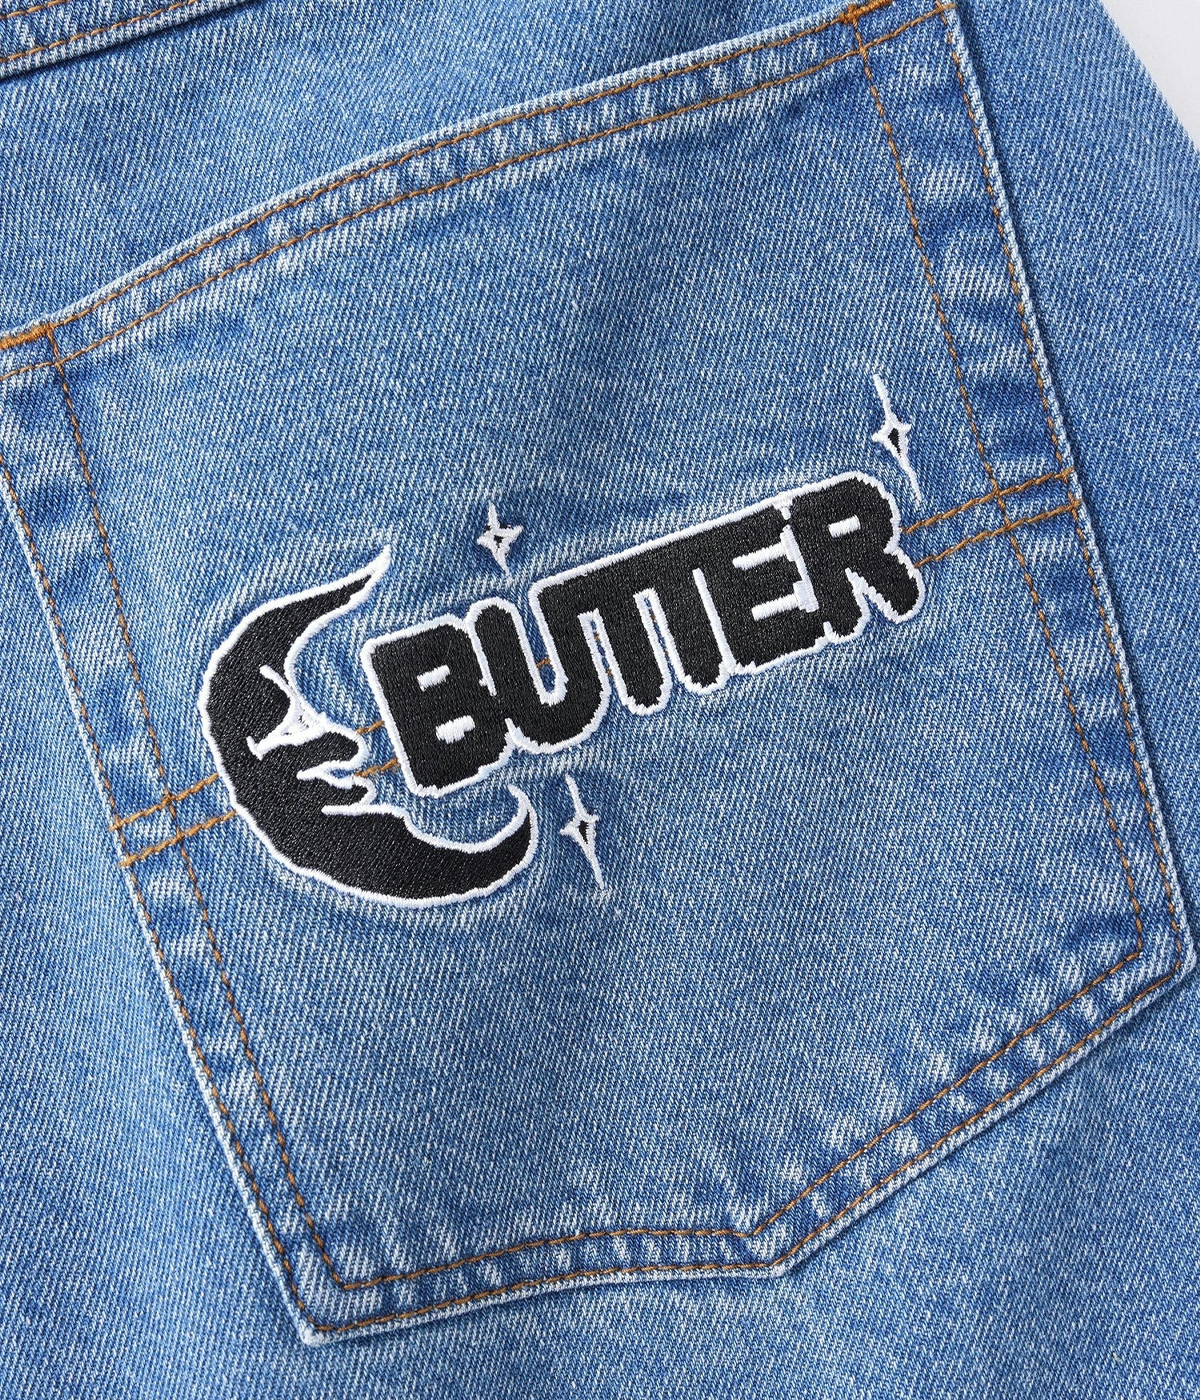 Butter Goods Critter Denim Jeans Washed Indigo 4